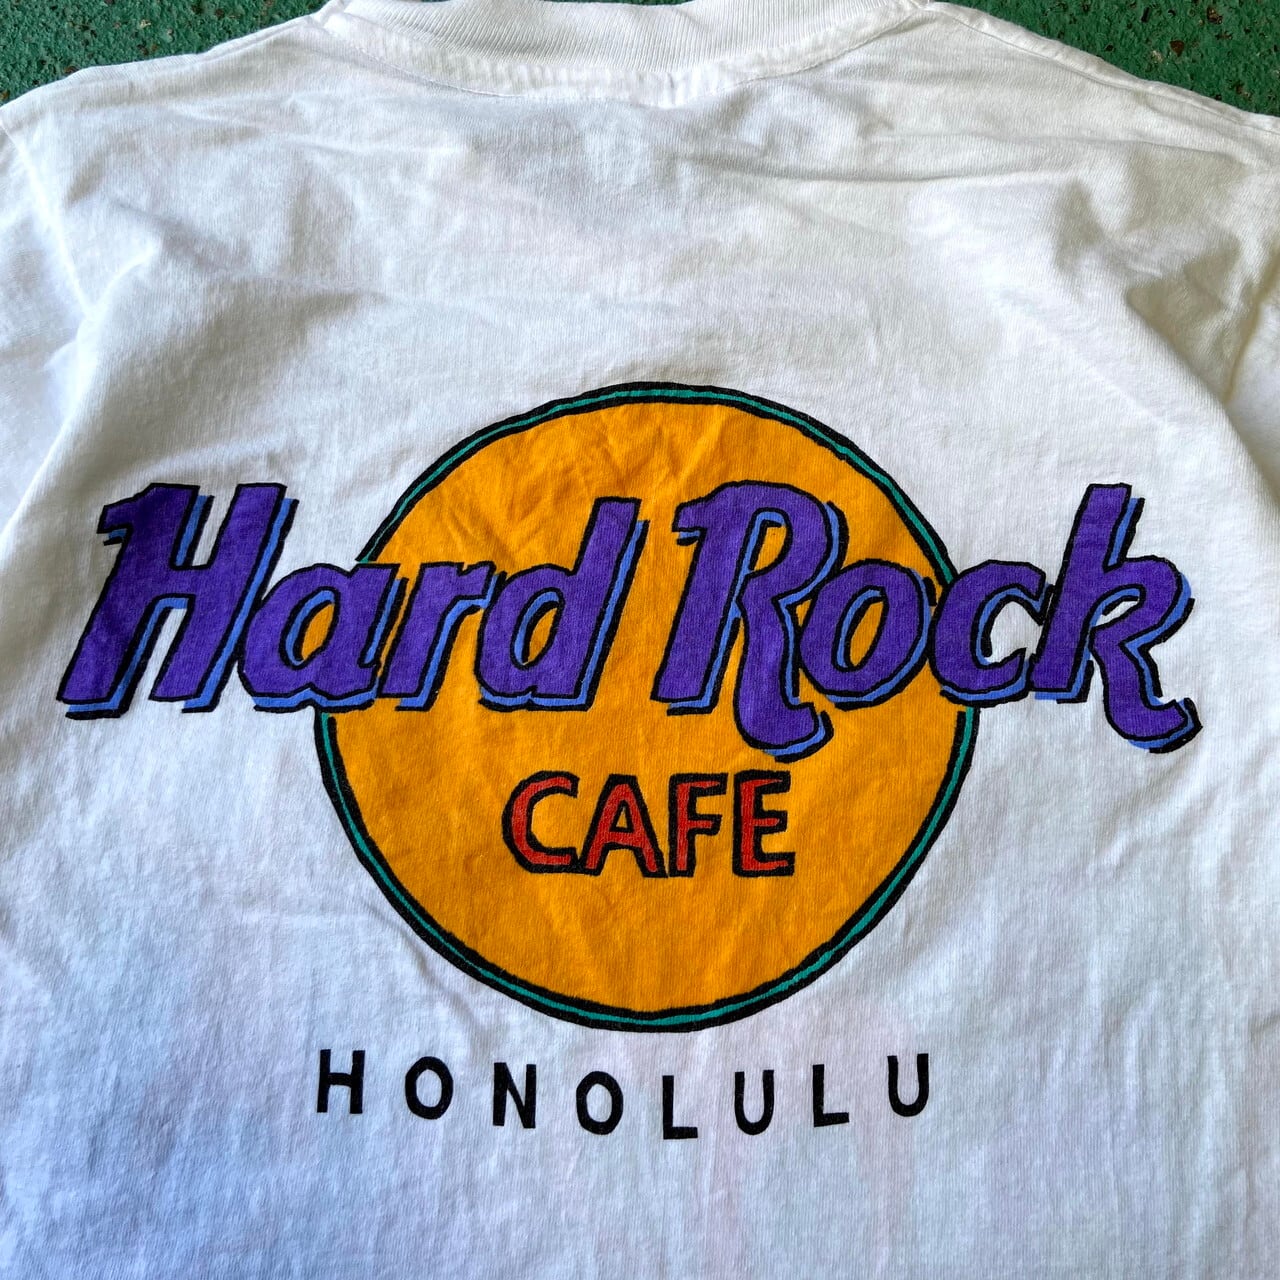 90s ハードロックカフェ ホノルル プリントロゴ 半袖Tシャツ XL USA製